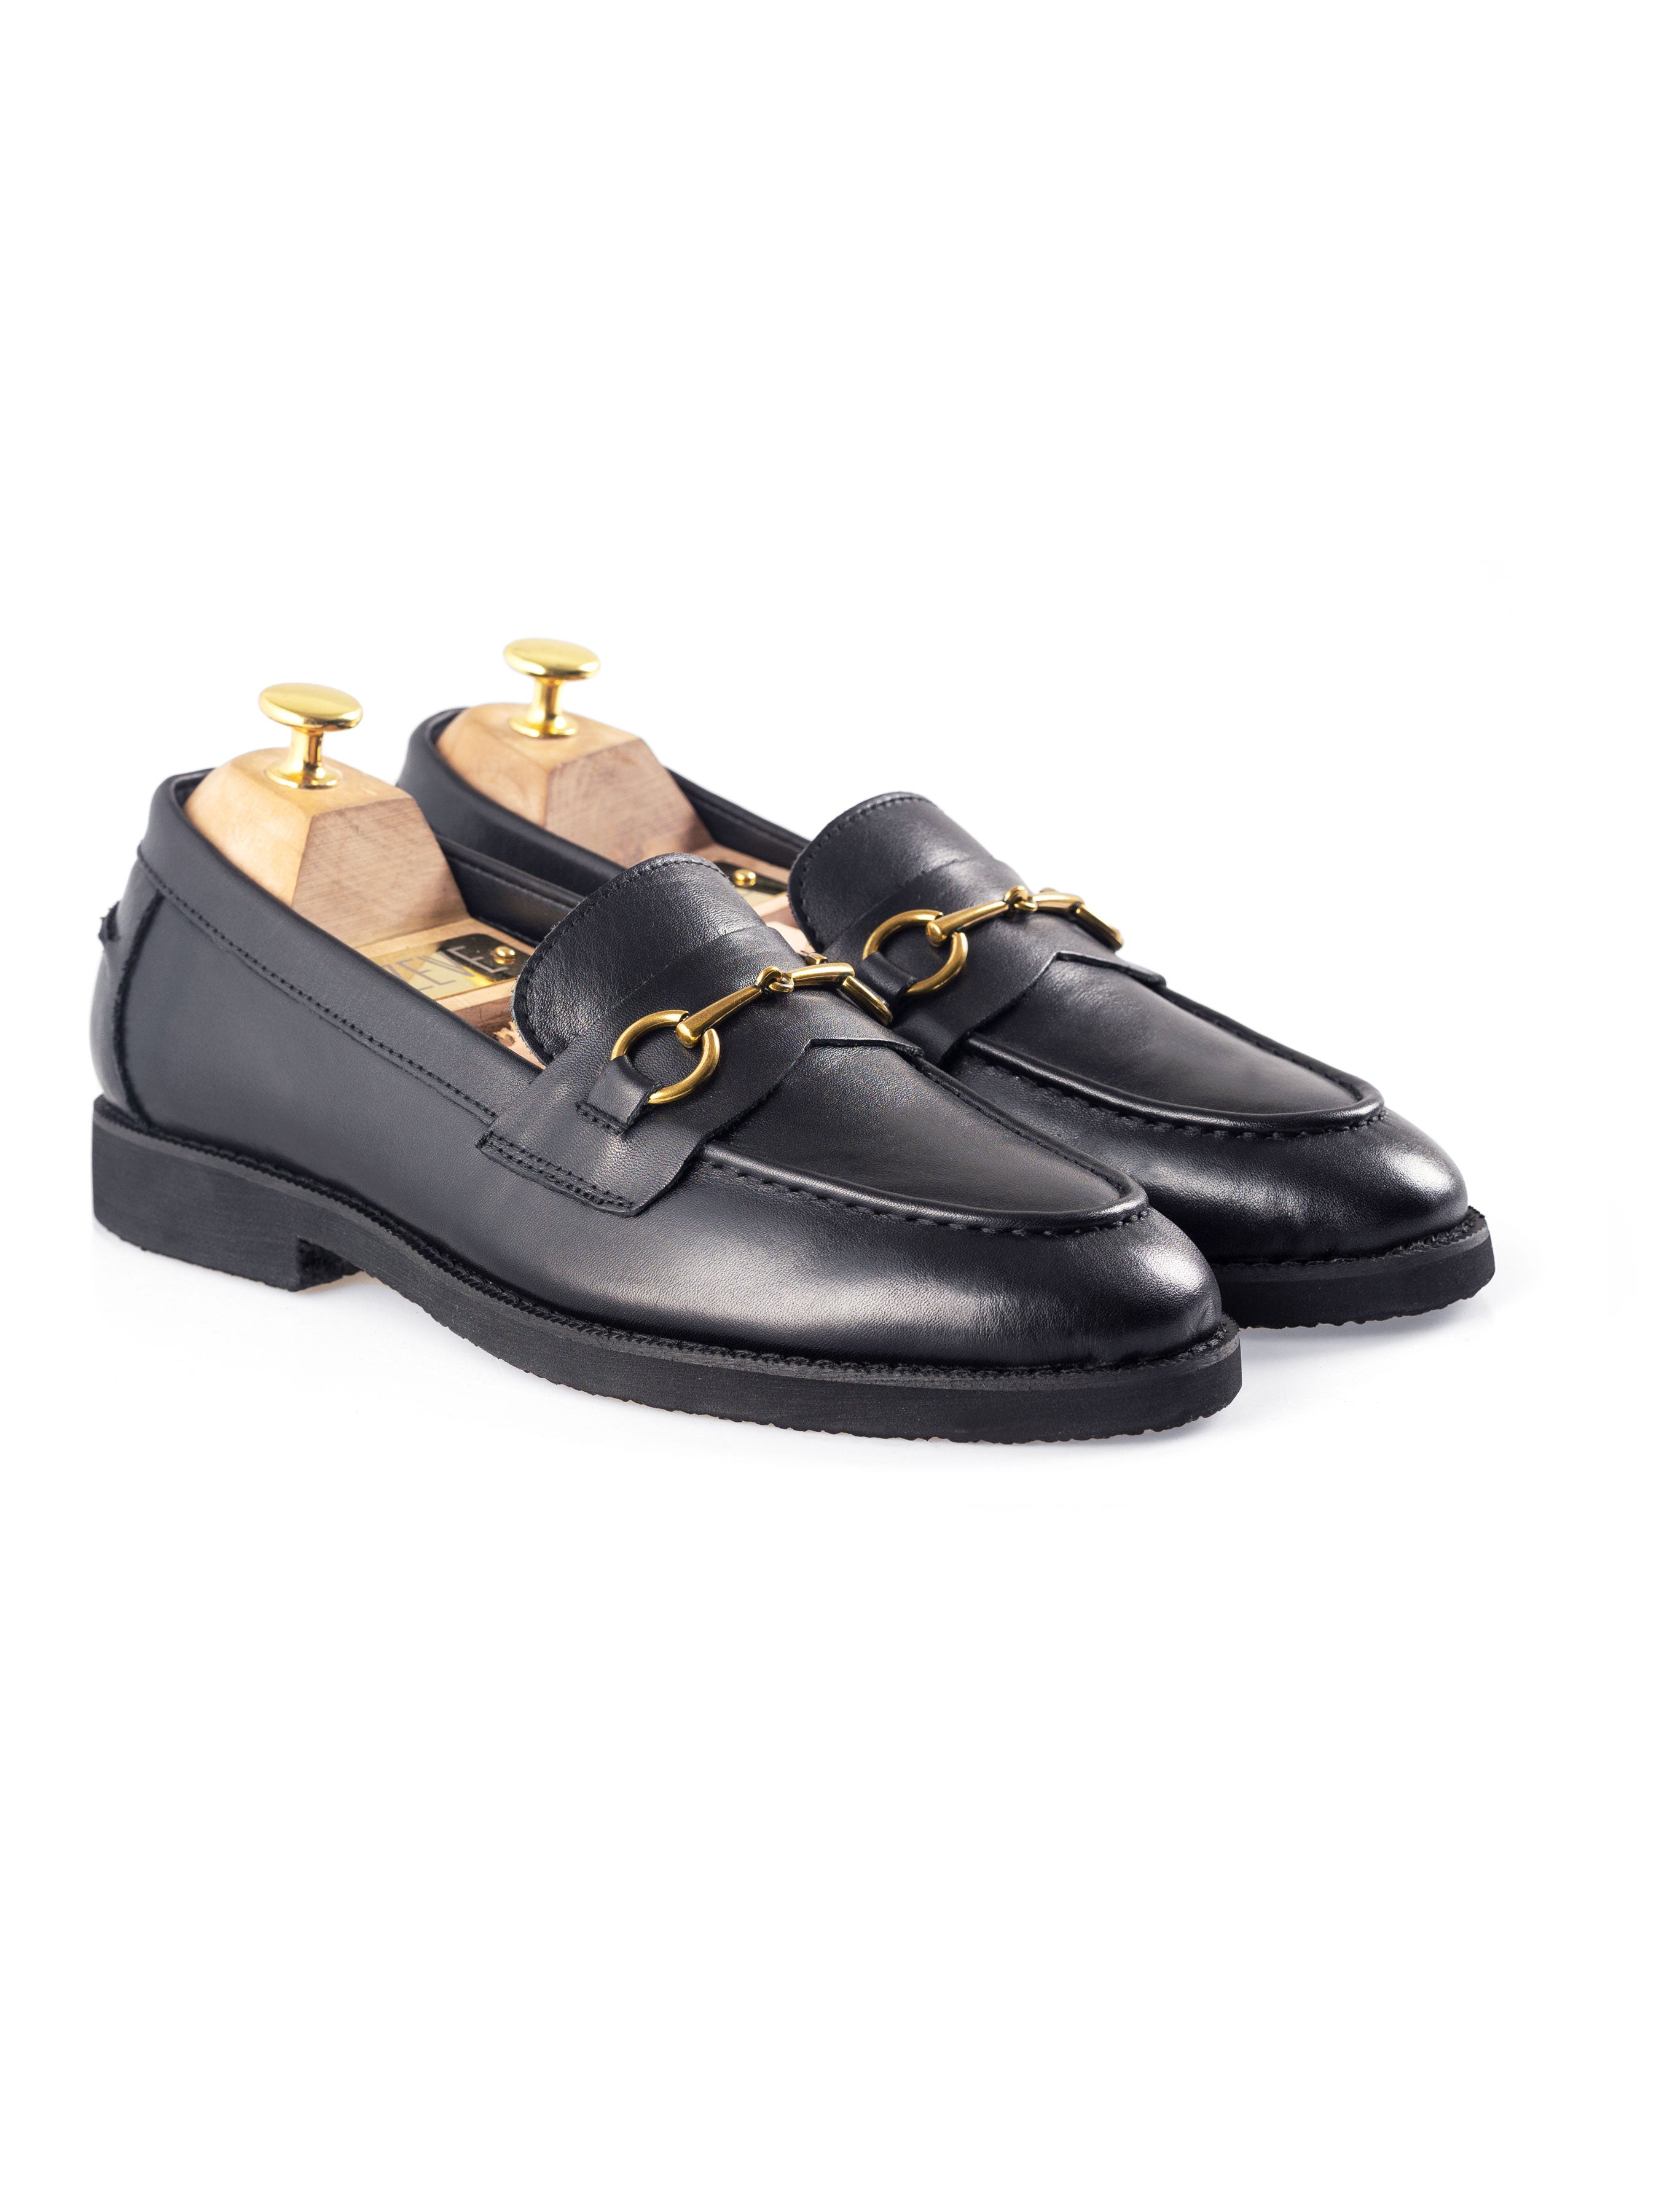 Penny Loafer Horsebit Buckle - Black Leather (Crepe Sole) - Zeve Shoes